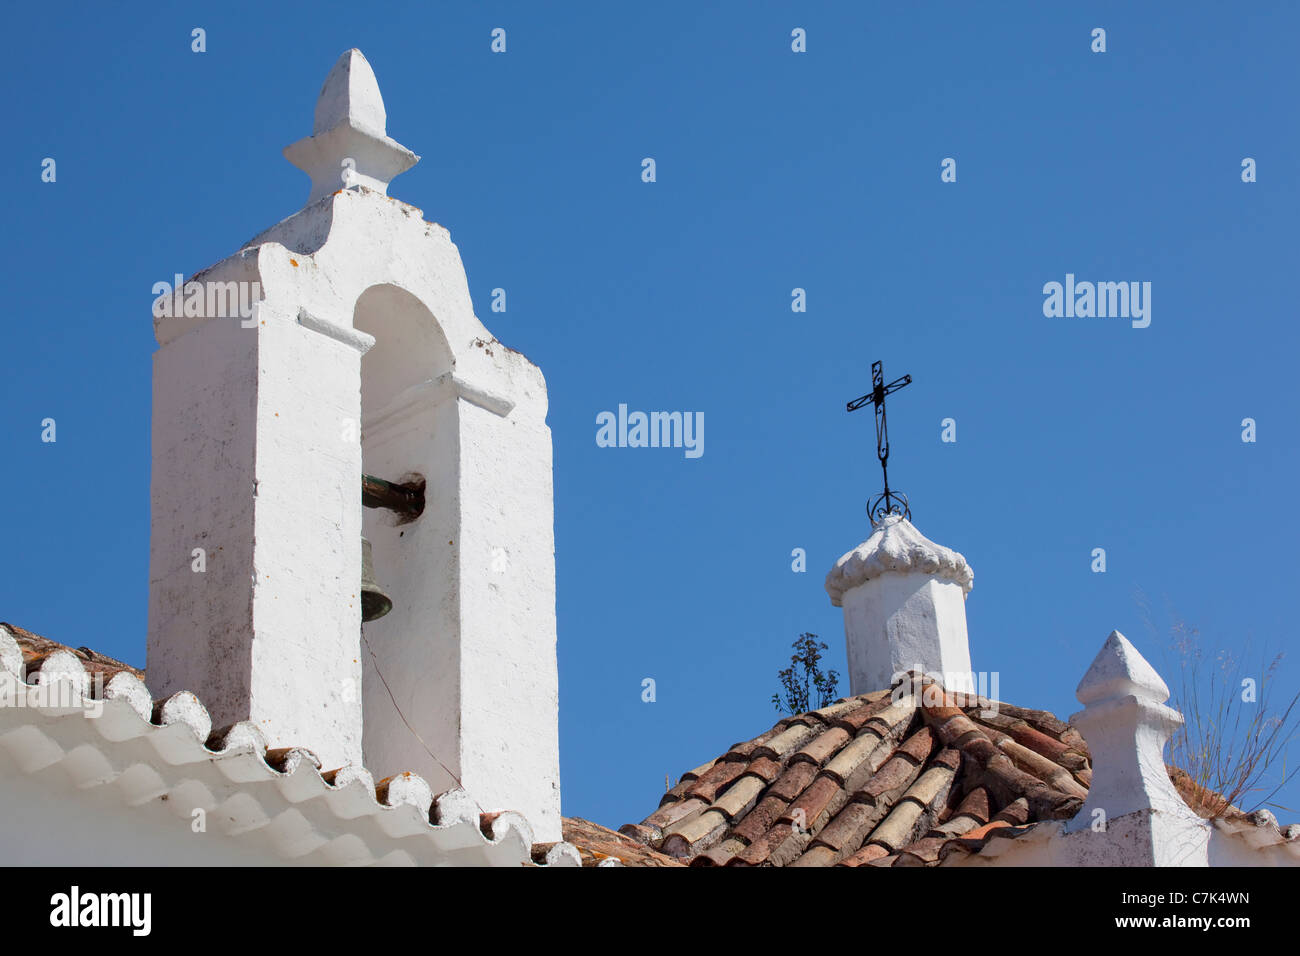 Portugal, Algarve, Alte, Church Rooftop Stock Photo